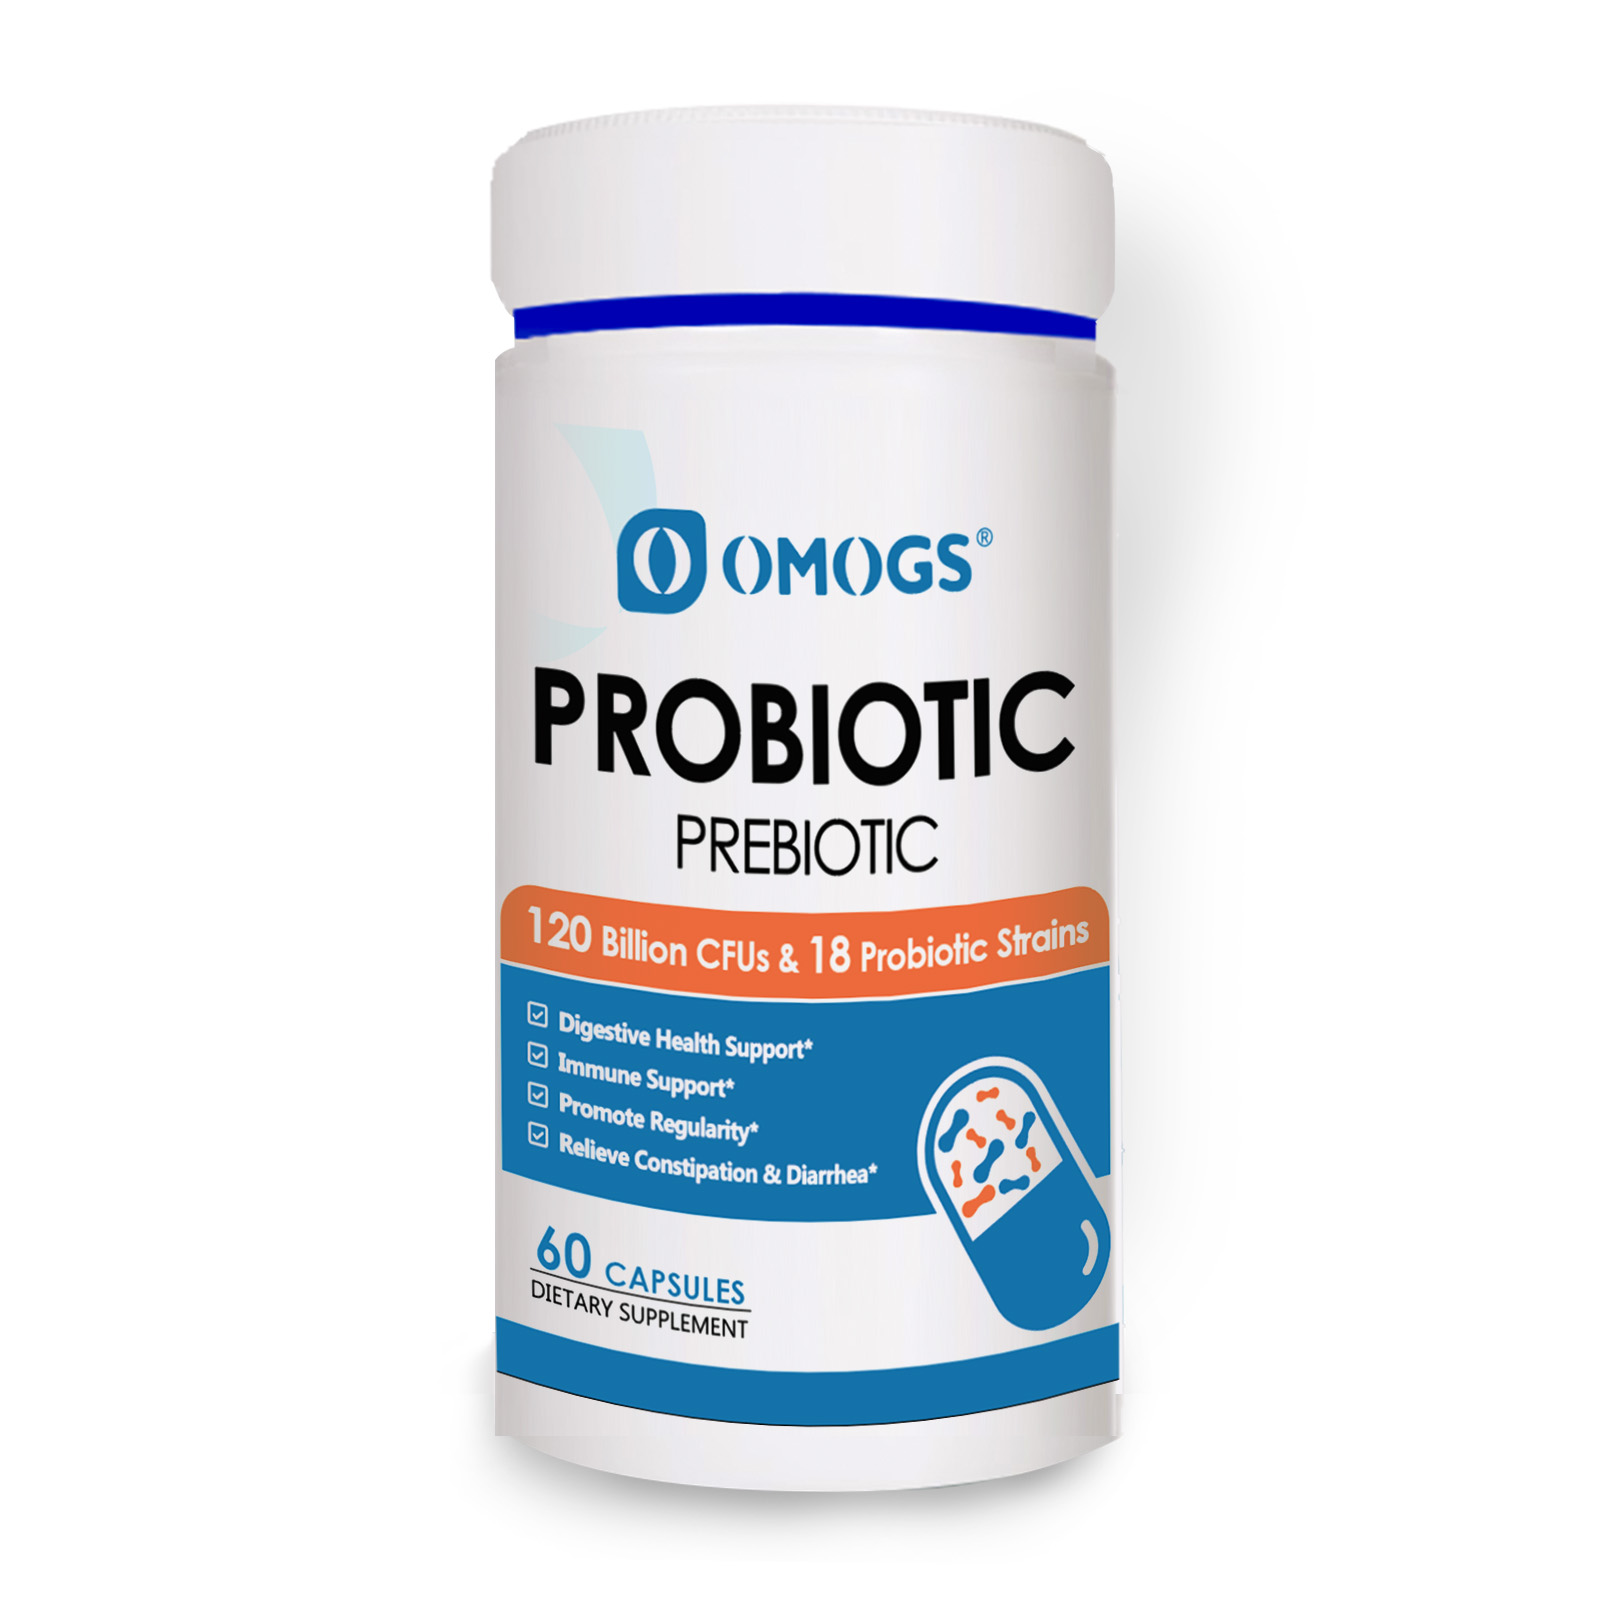 OMOGS Probiotic 120 tỷ CFUs 18 chủng Probiotics men vi sinh cho phụ nữ